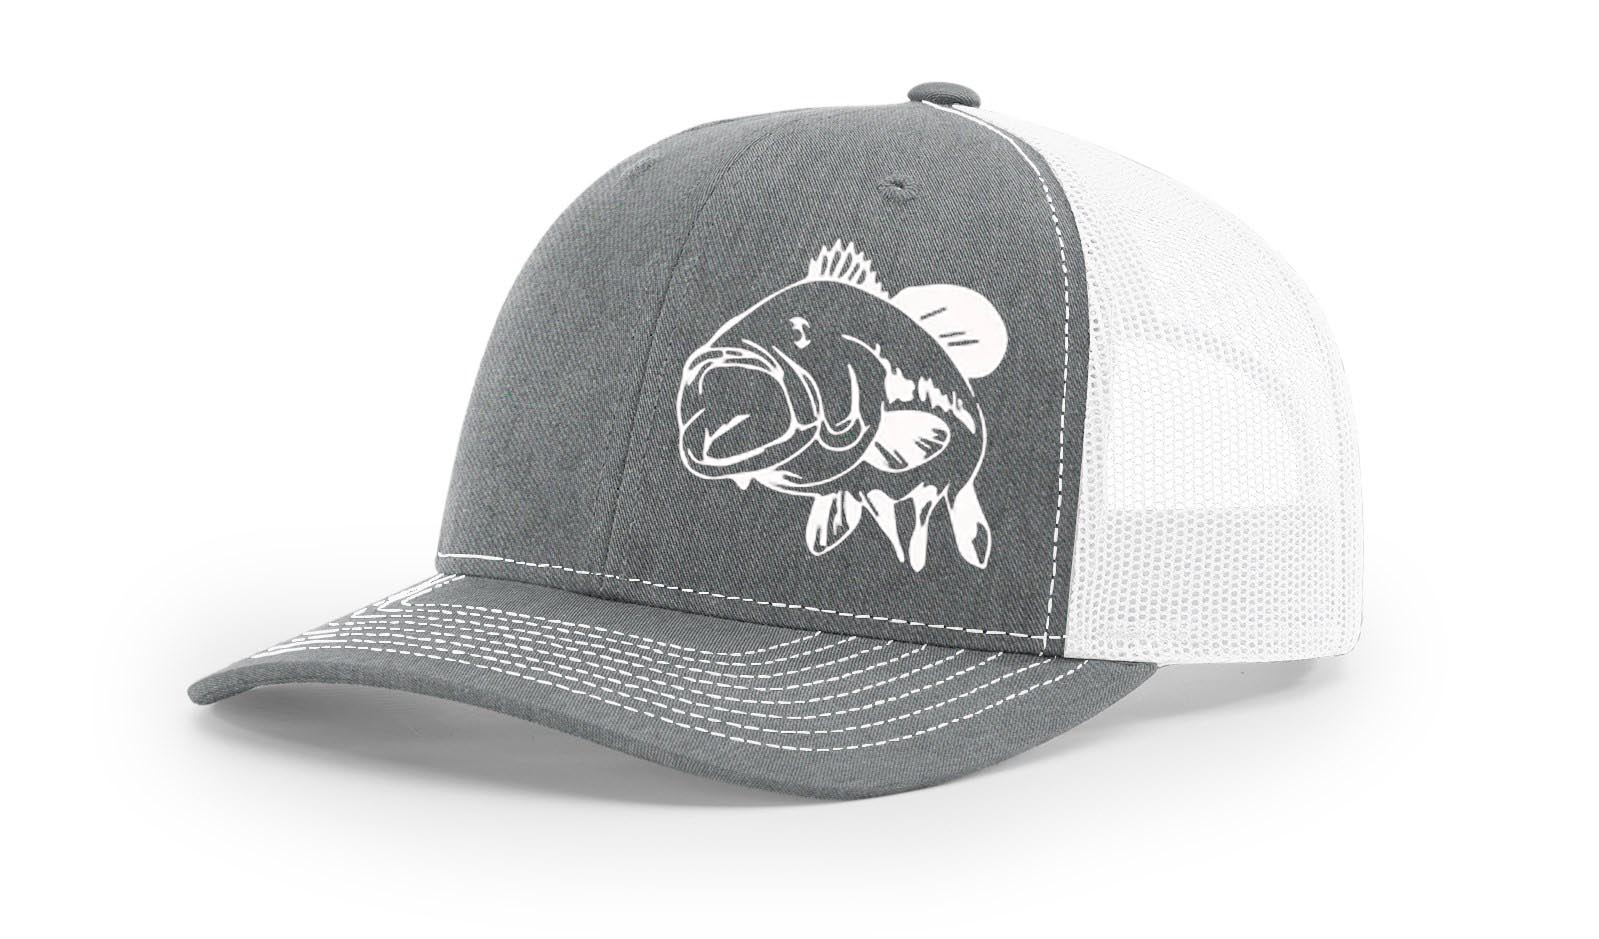 Skillfish - Grey snapback Cap - Large Mouth Bass Fishing Charcoal/Black Snapback @ Hatstore